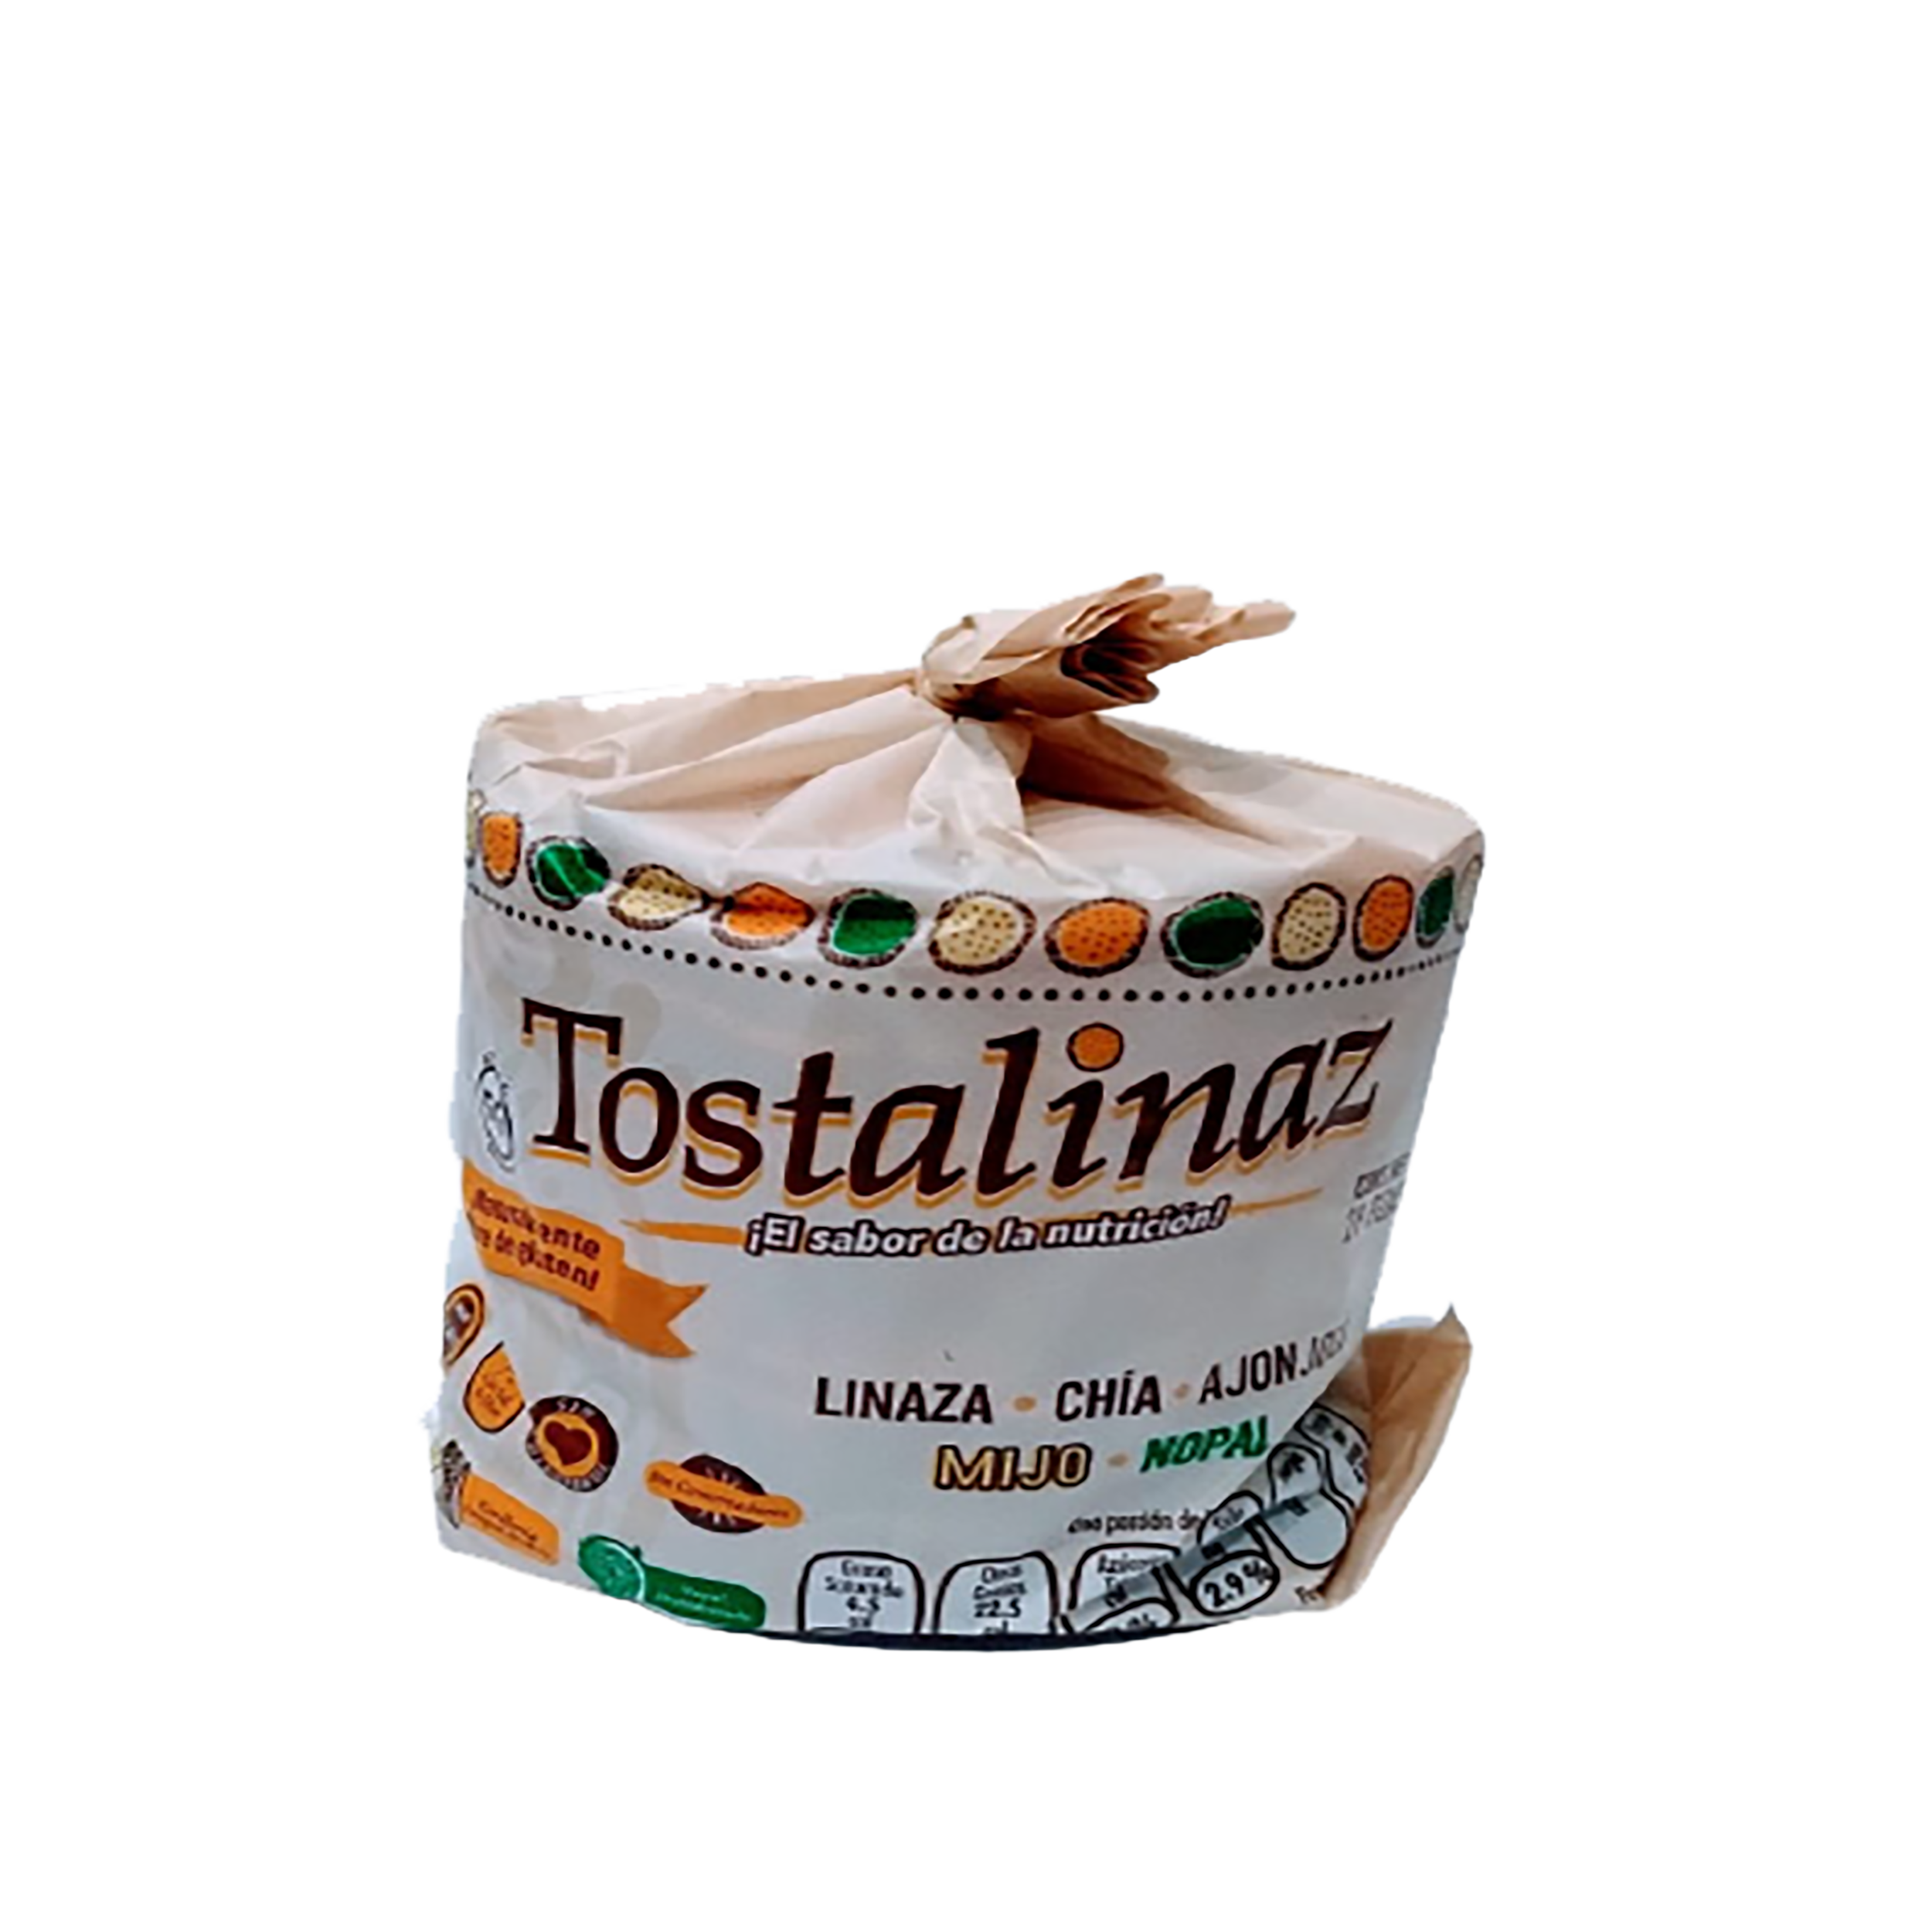 Xinalic -Tostalinaz nopal/combinadas 21 Pz